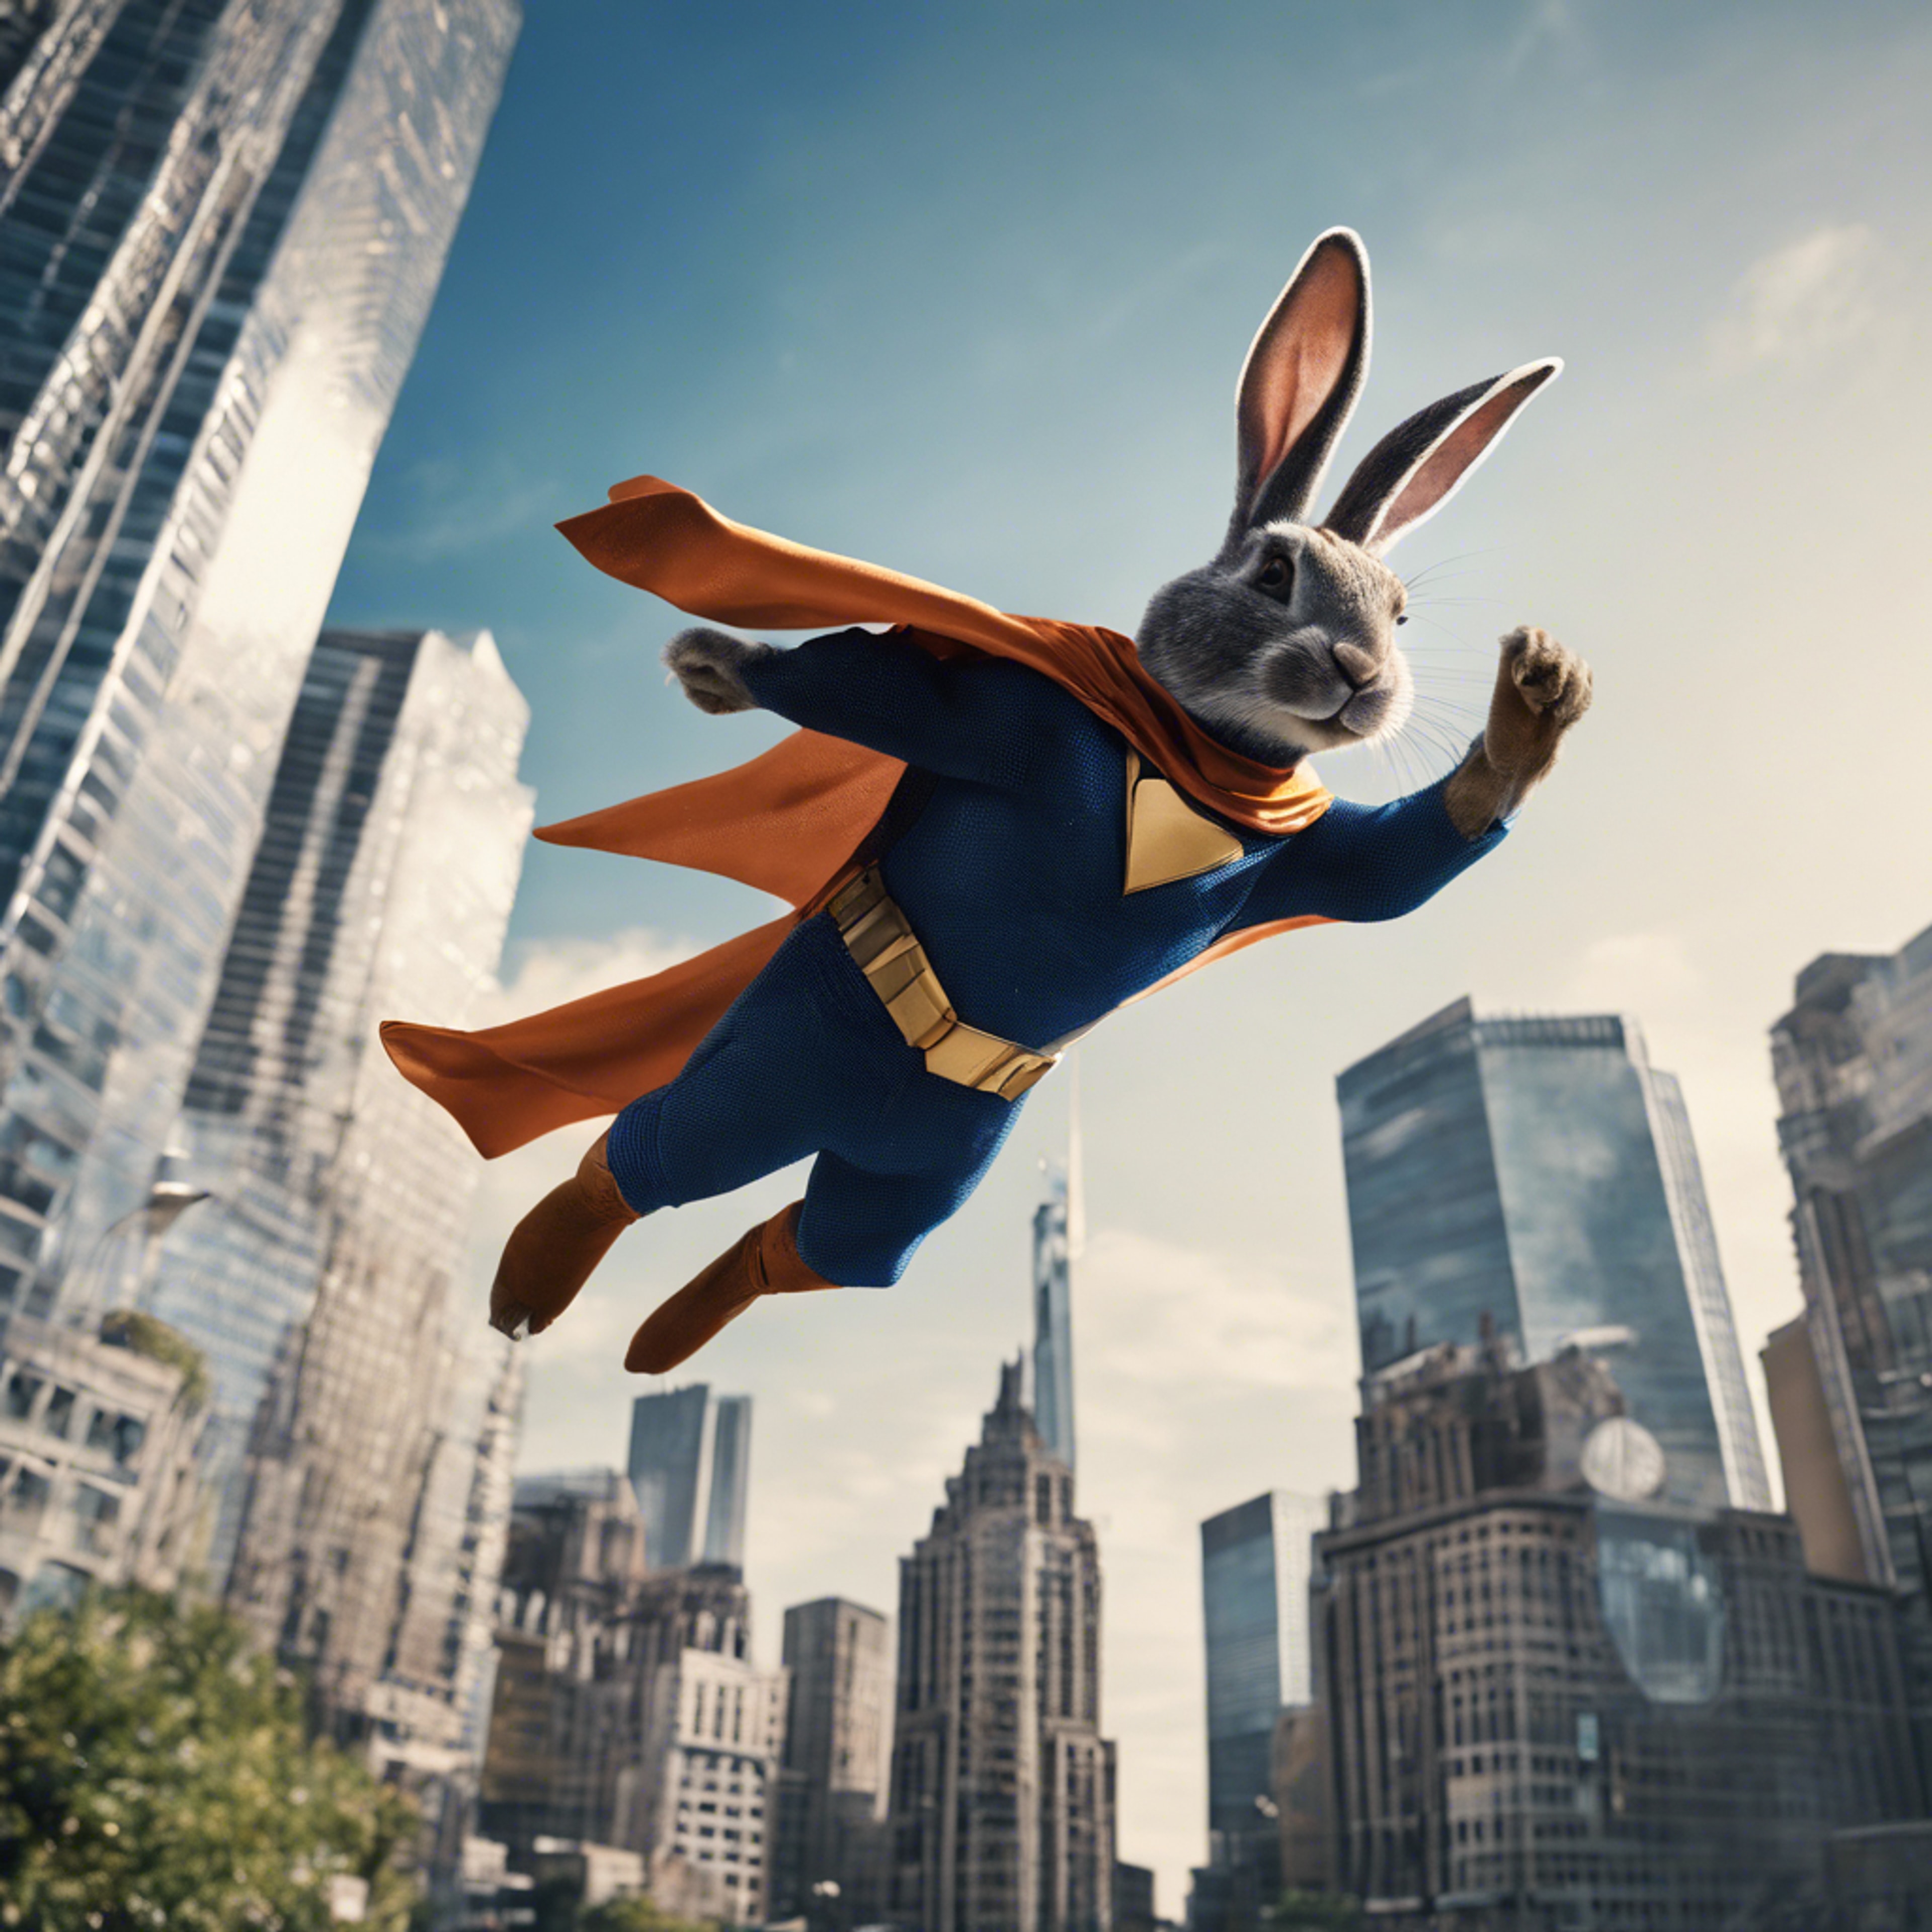 A rabbit superhero soaring above skyscrapers in a bustling city. Tapet[841b91138e24419cbc55]